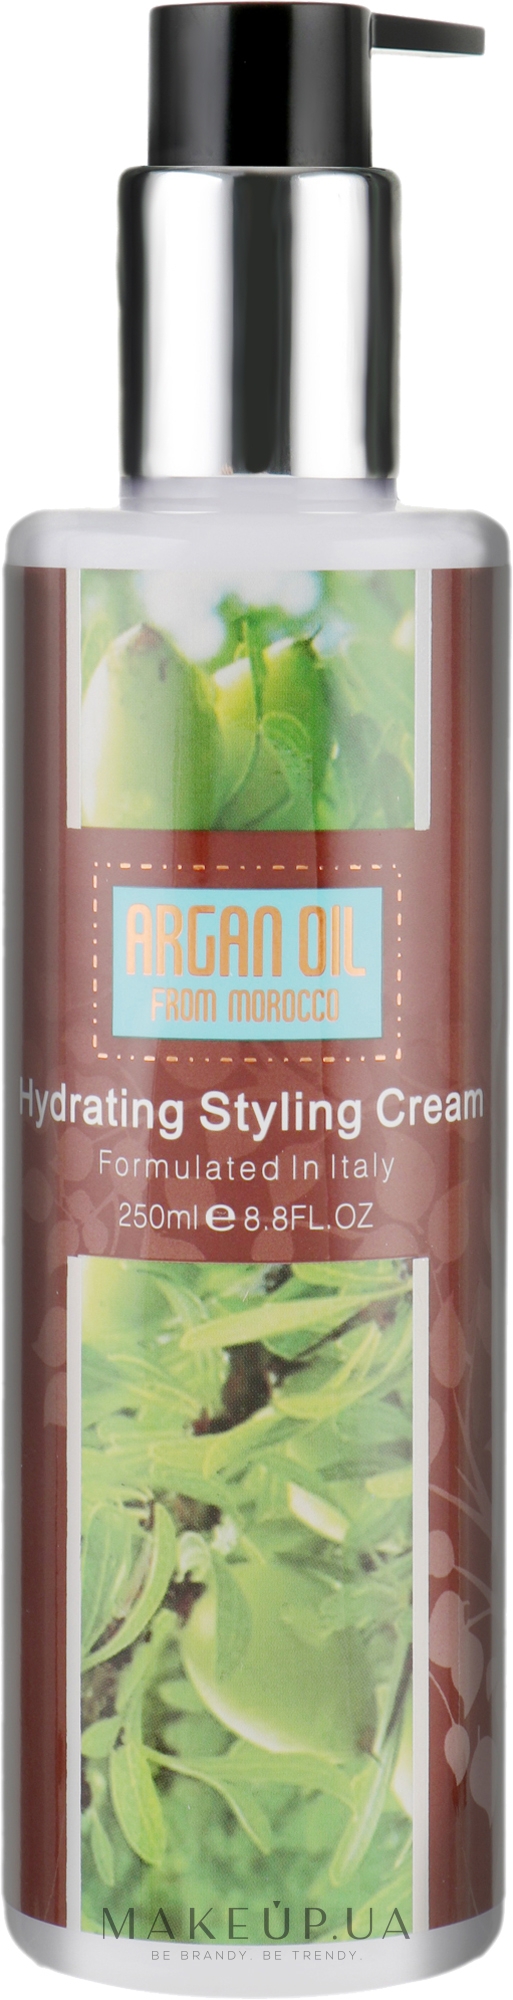 Увлажняющий крем для укладки волос - Clever Hair Cosmetics Morocco argan oil Hydrating Styling Cream — фото 250ml